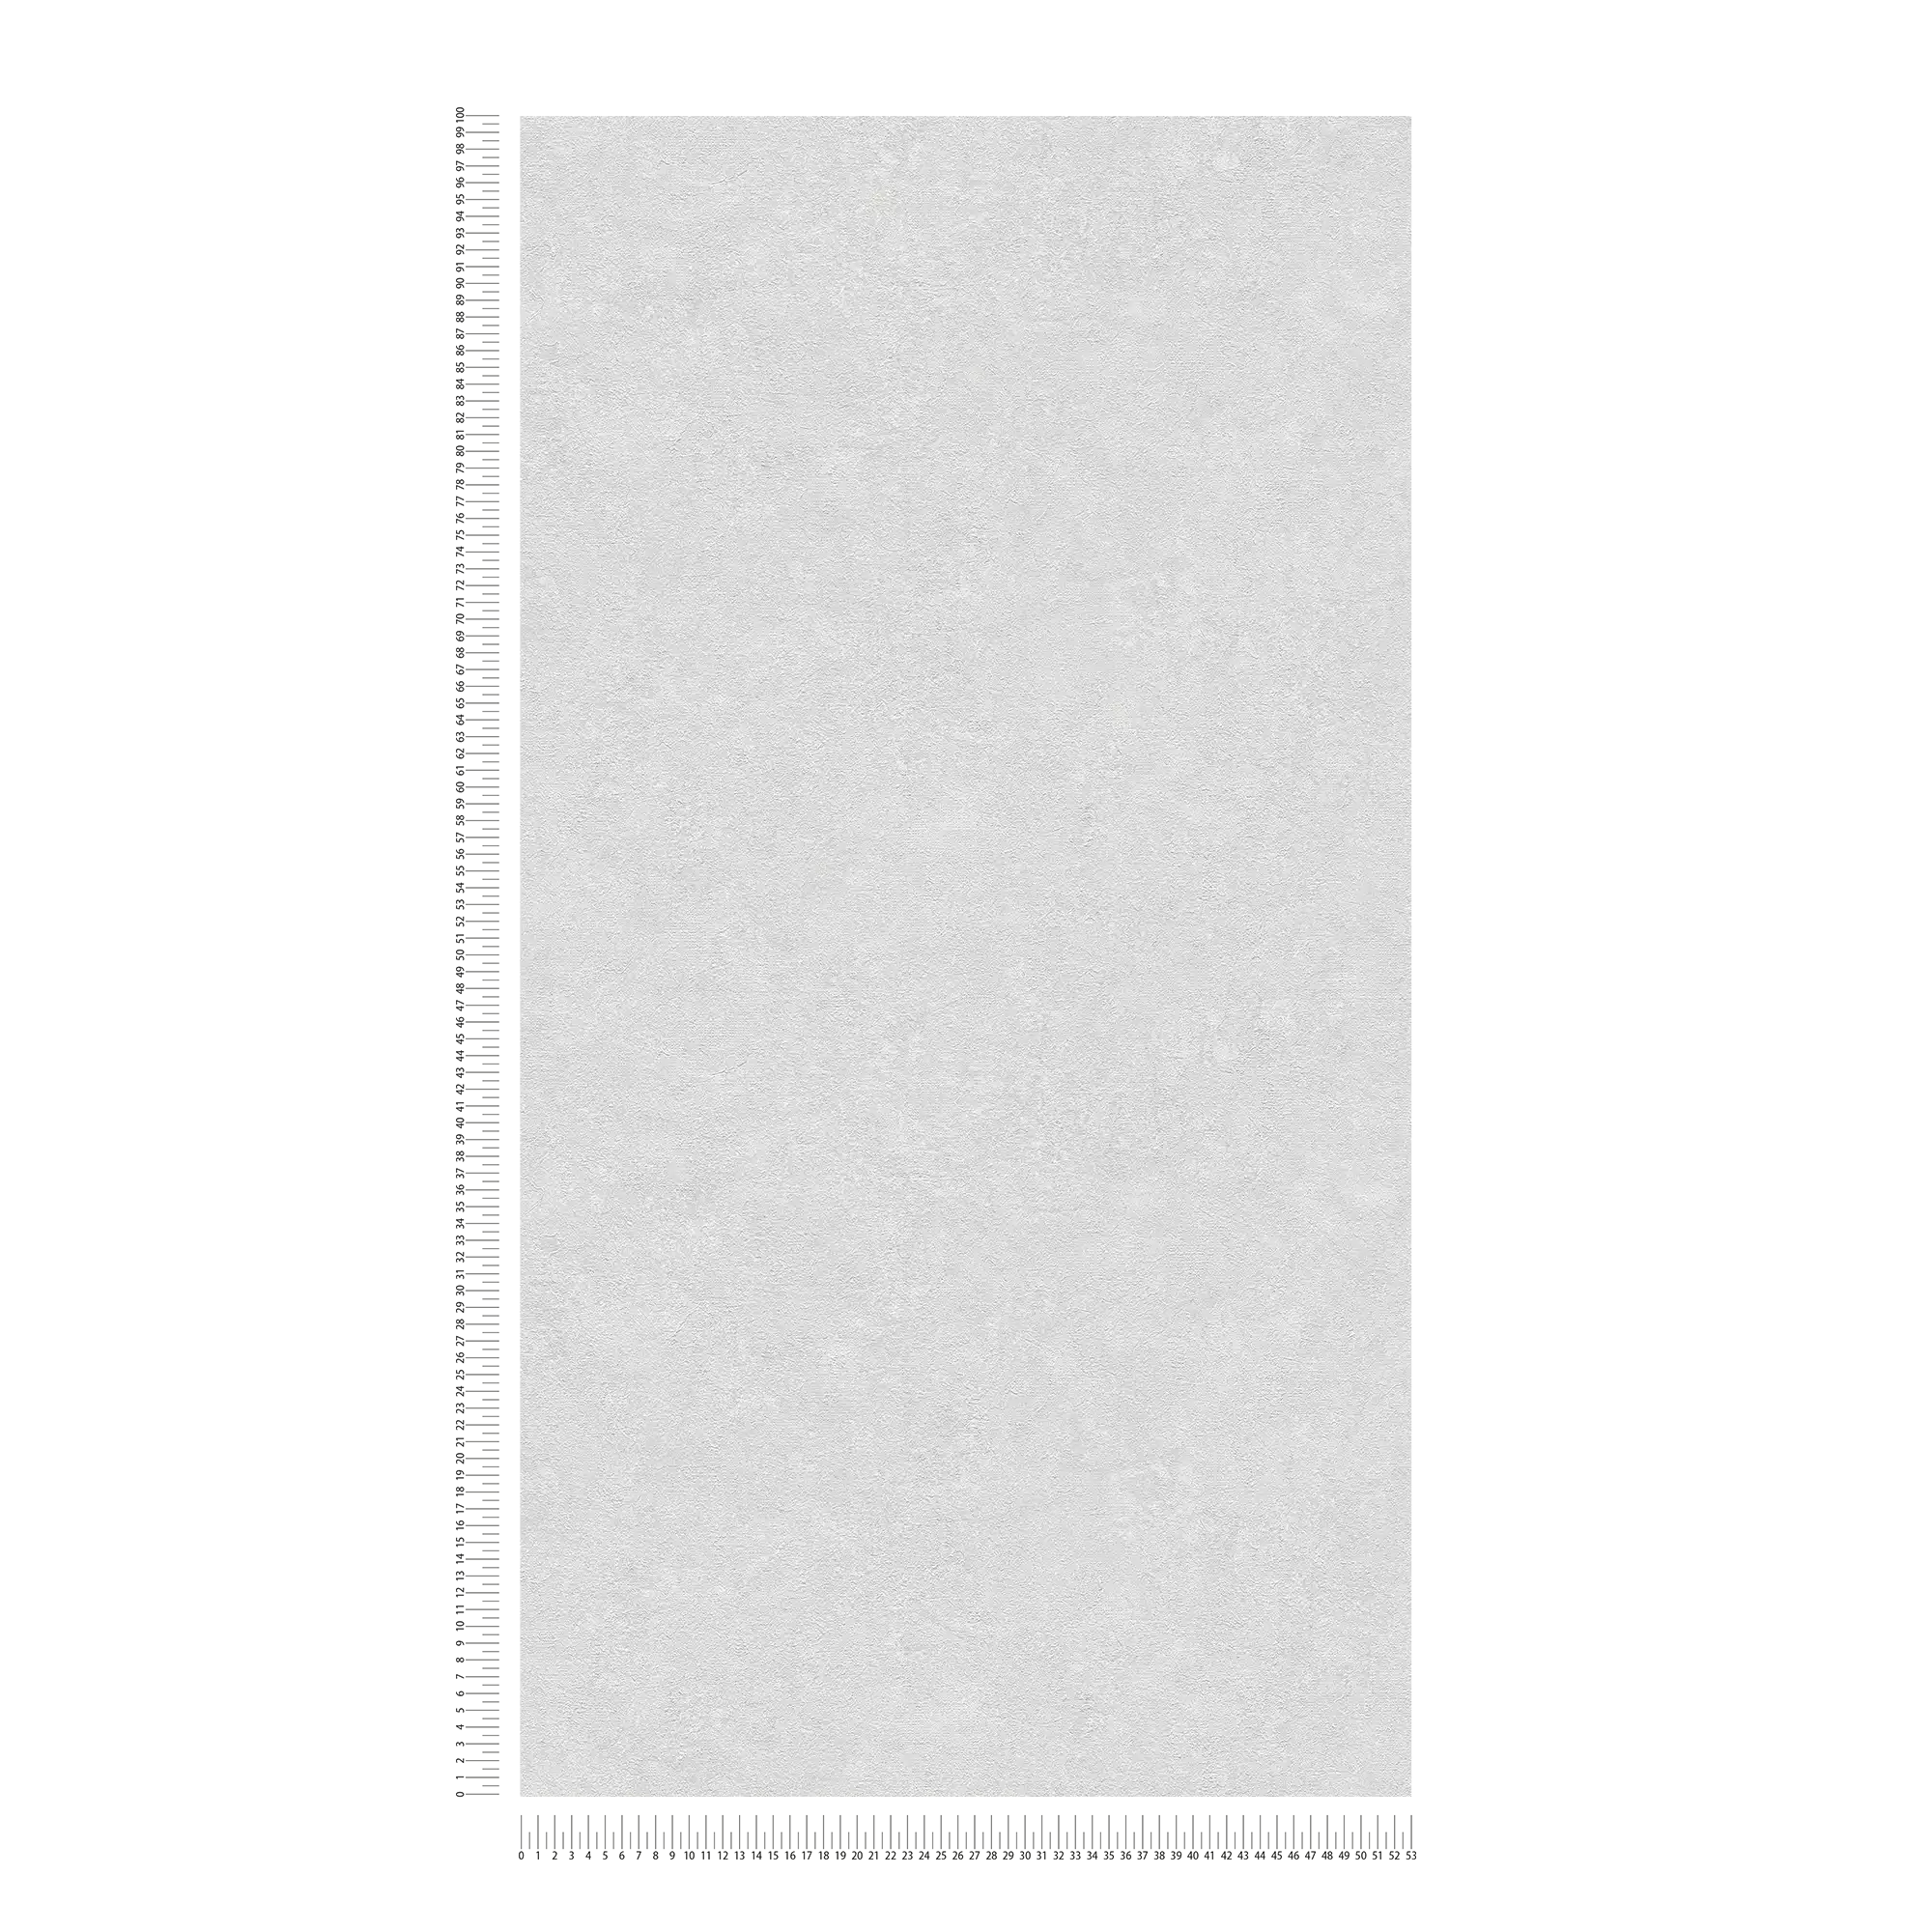             Tapete einfarbig mit Putzoptik – Grau, Weiß
        